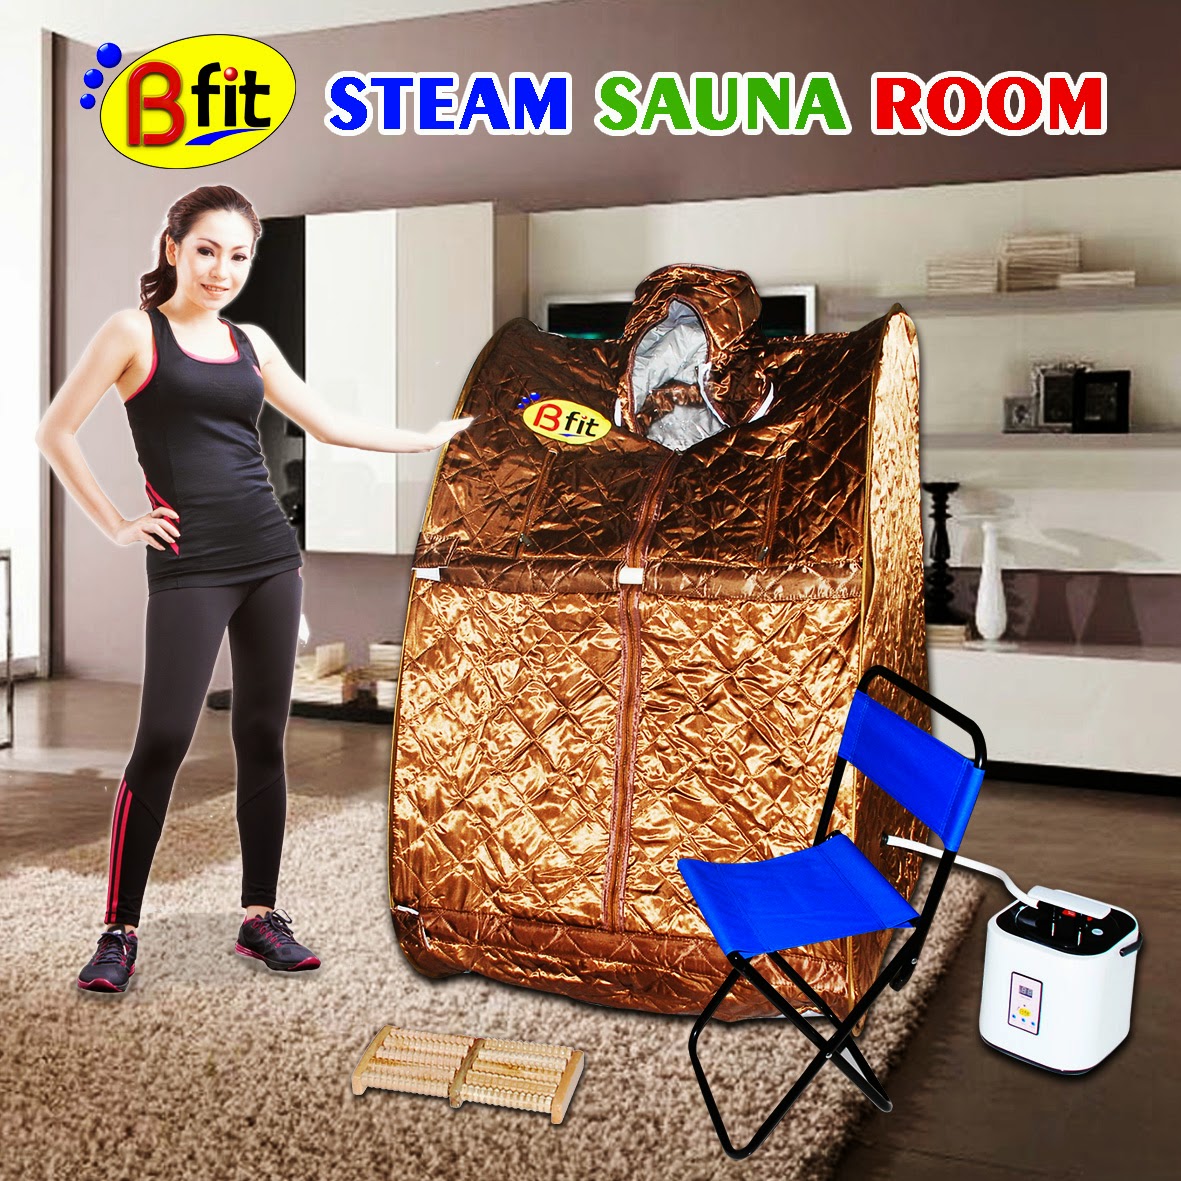 The steam sauna room фото 26